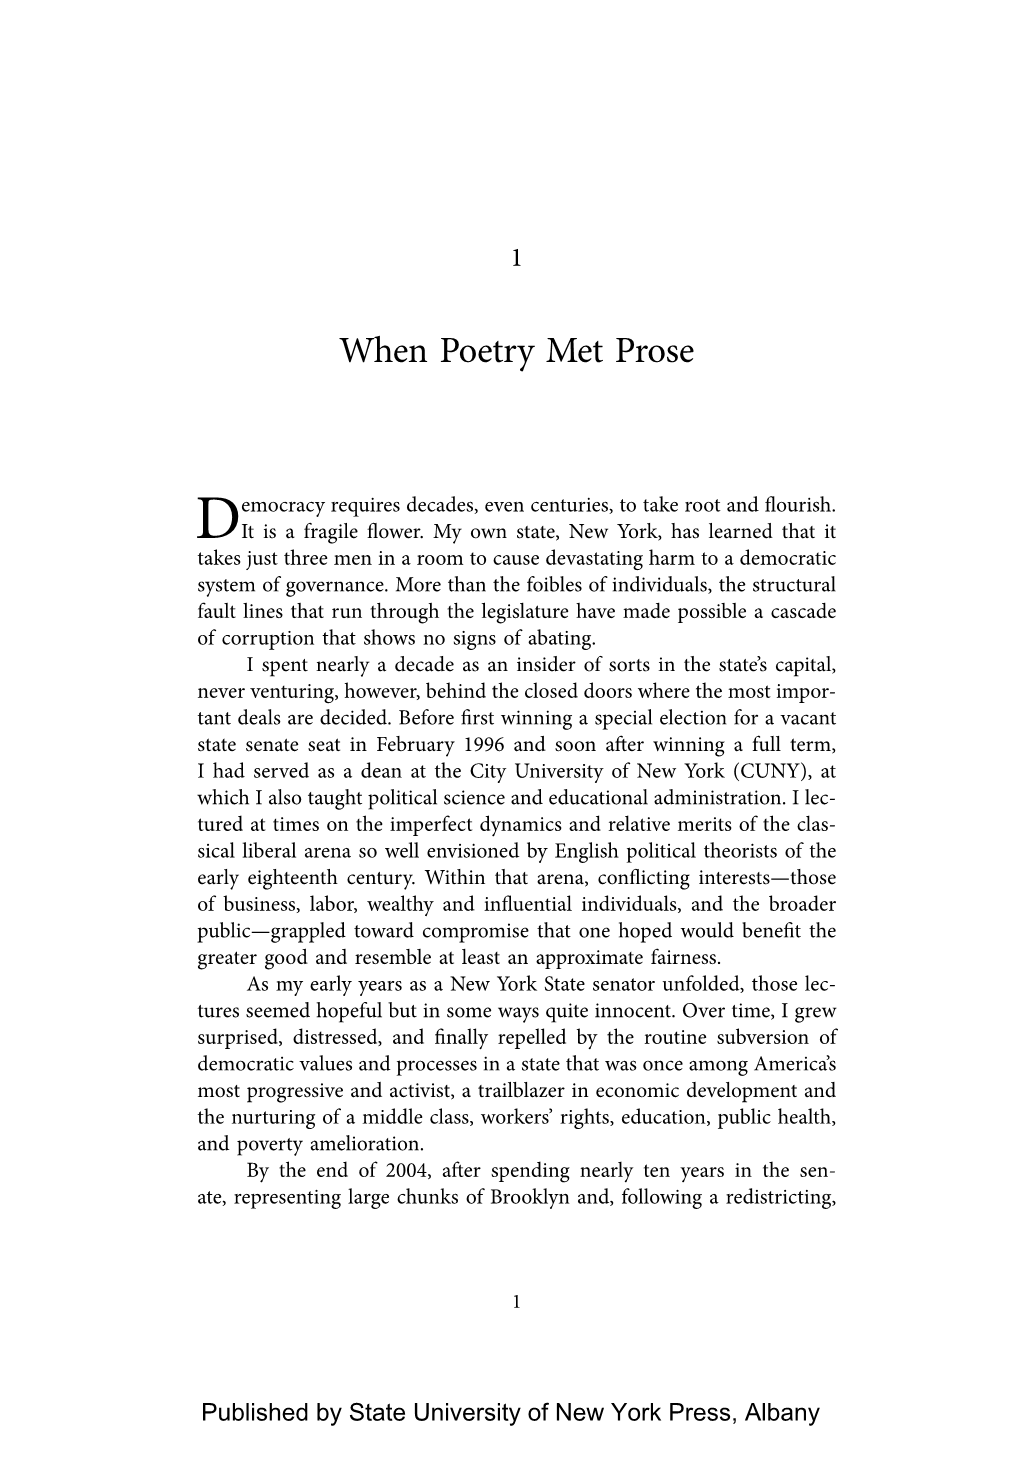 When Poetry Met Prose